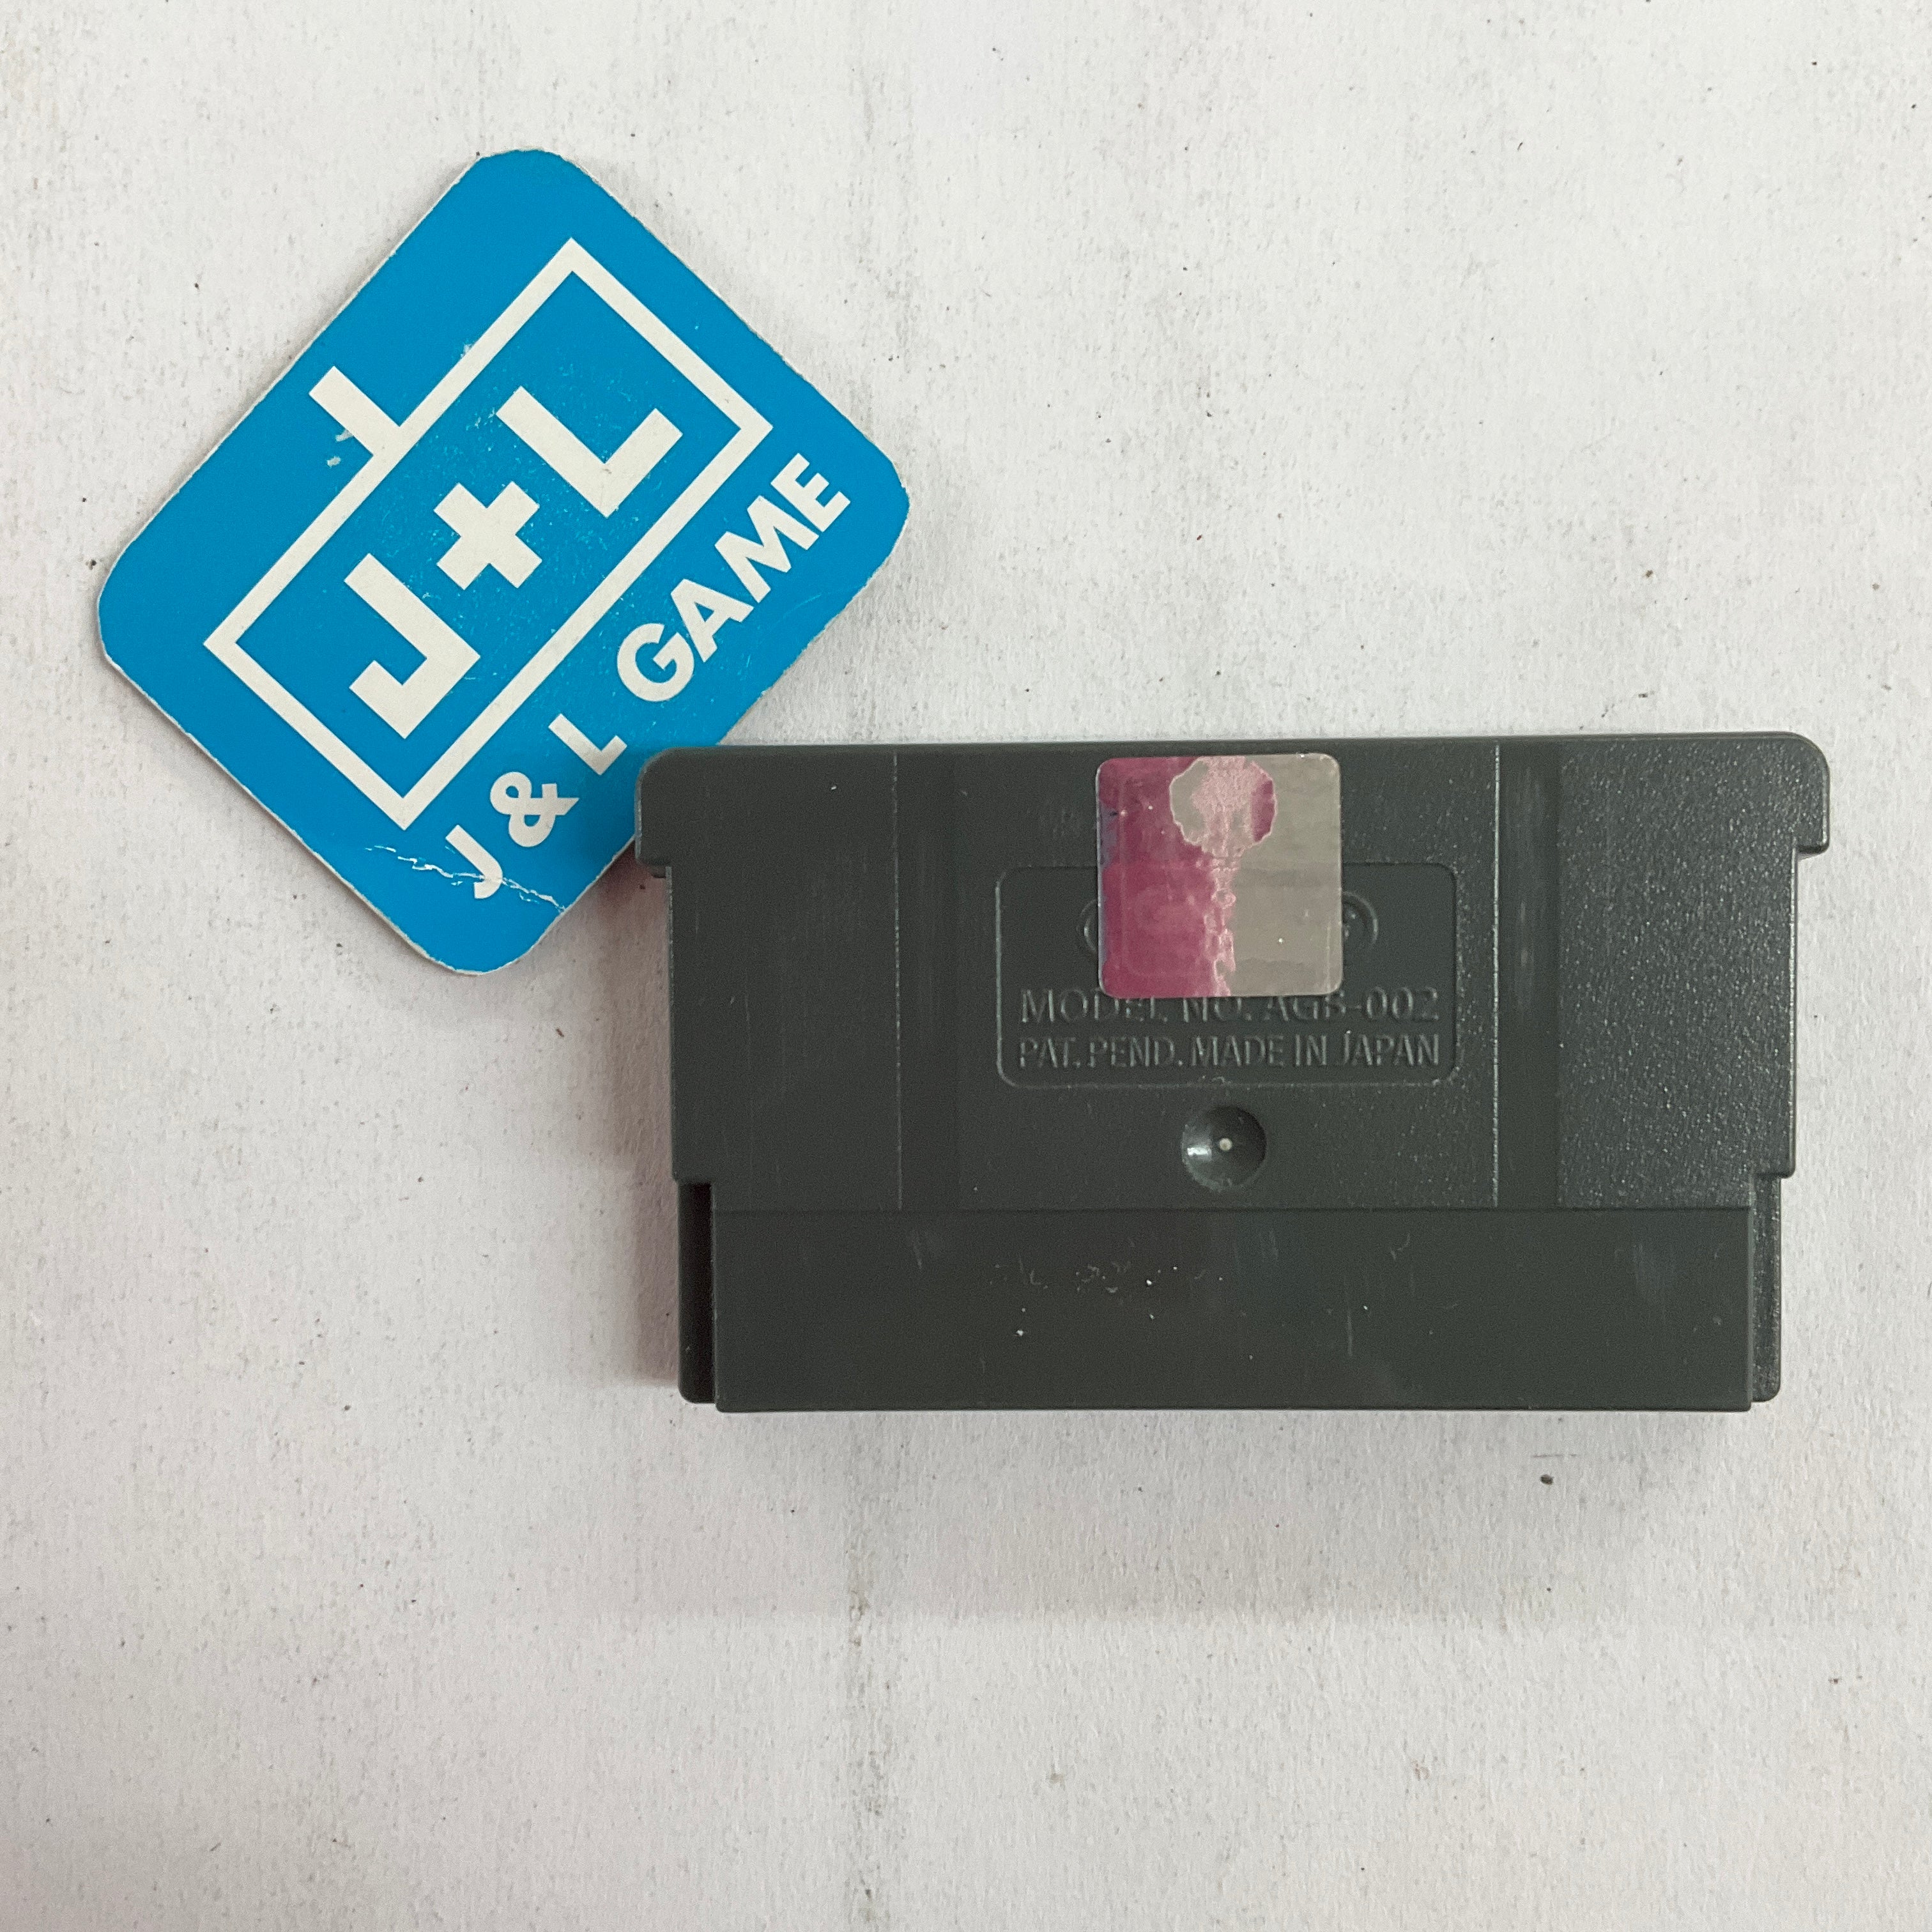 Polly Pocket: Super Splash Island - (GBA) Game Boy Advance [Pre-Owned] Video Games DSI Games   